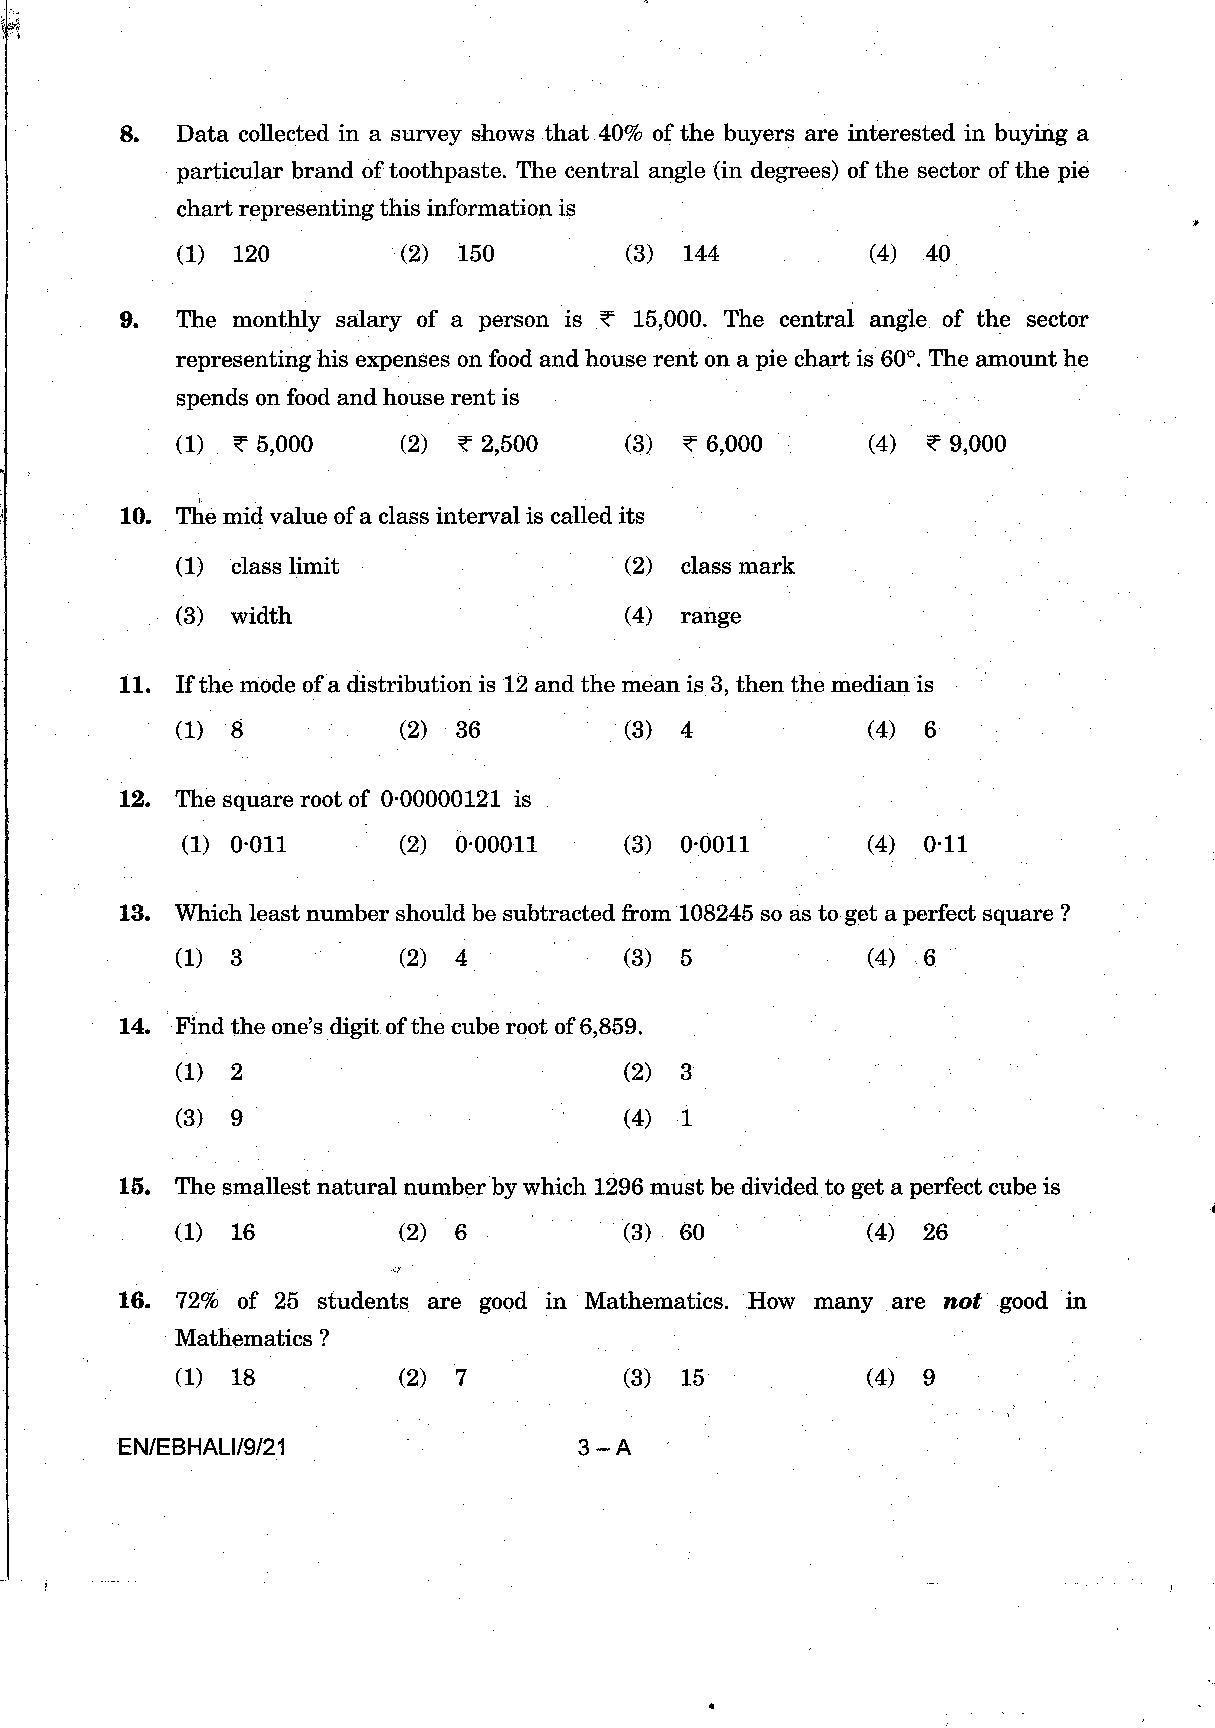 Sainik School Class 9 Question Paper 2021 in English - Page 3